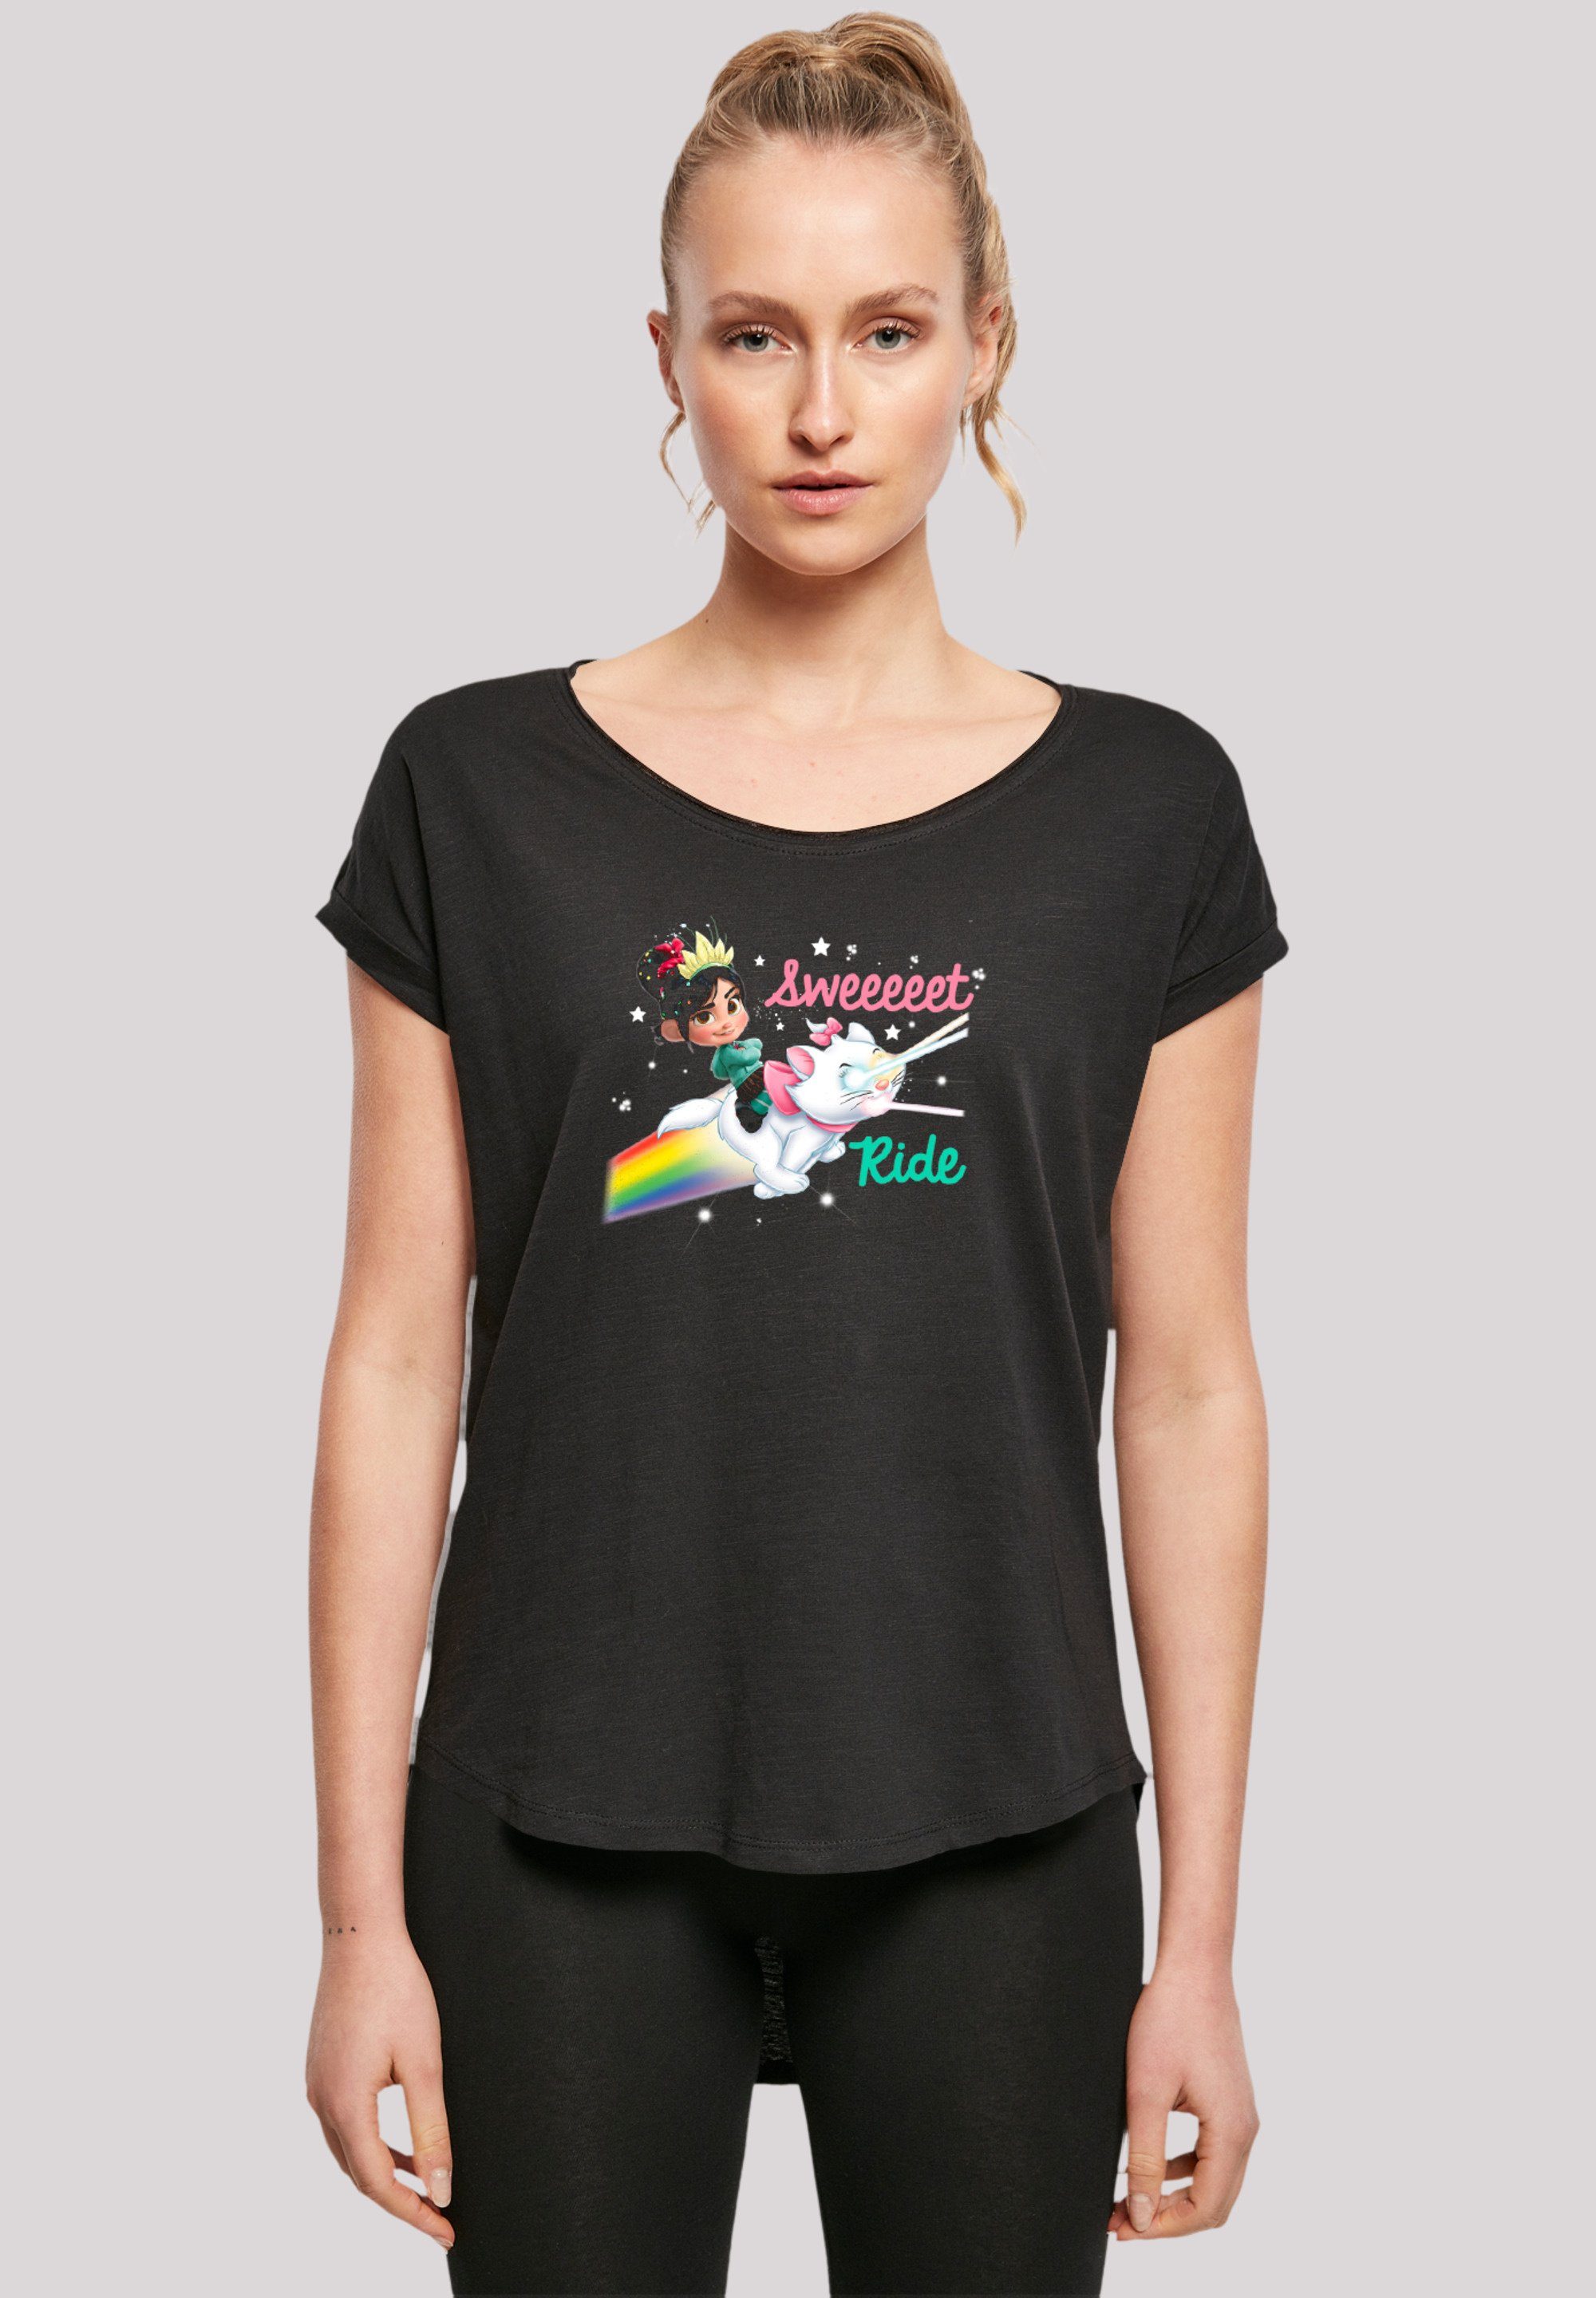 F4NT4STIC T-Shirt Disney Wreck-It Ralph Reichts Sweet Ride Premium Qualität